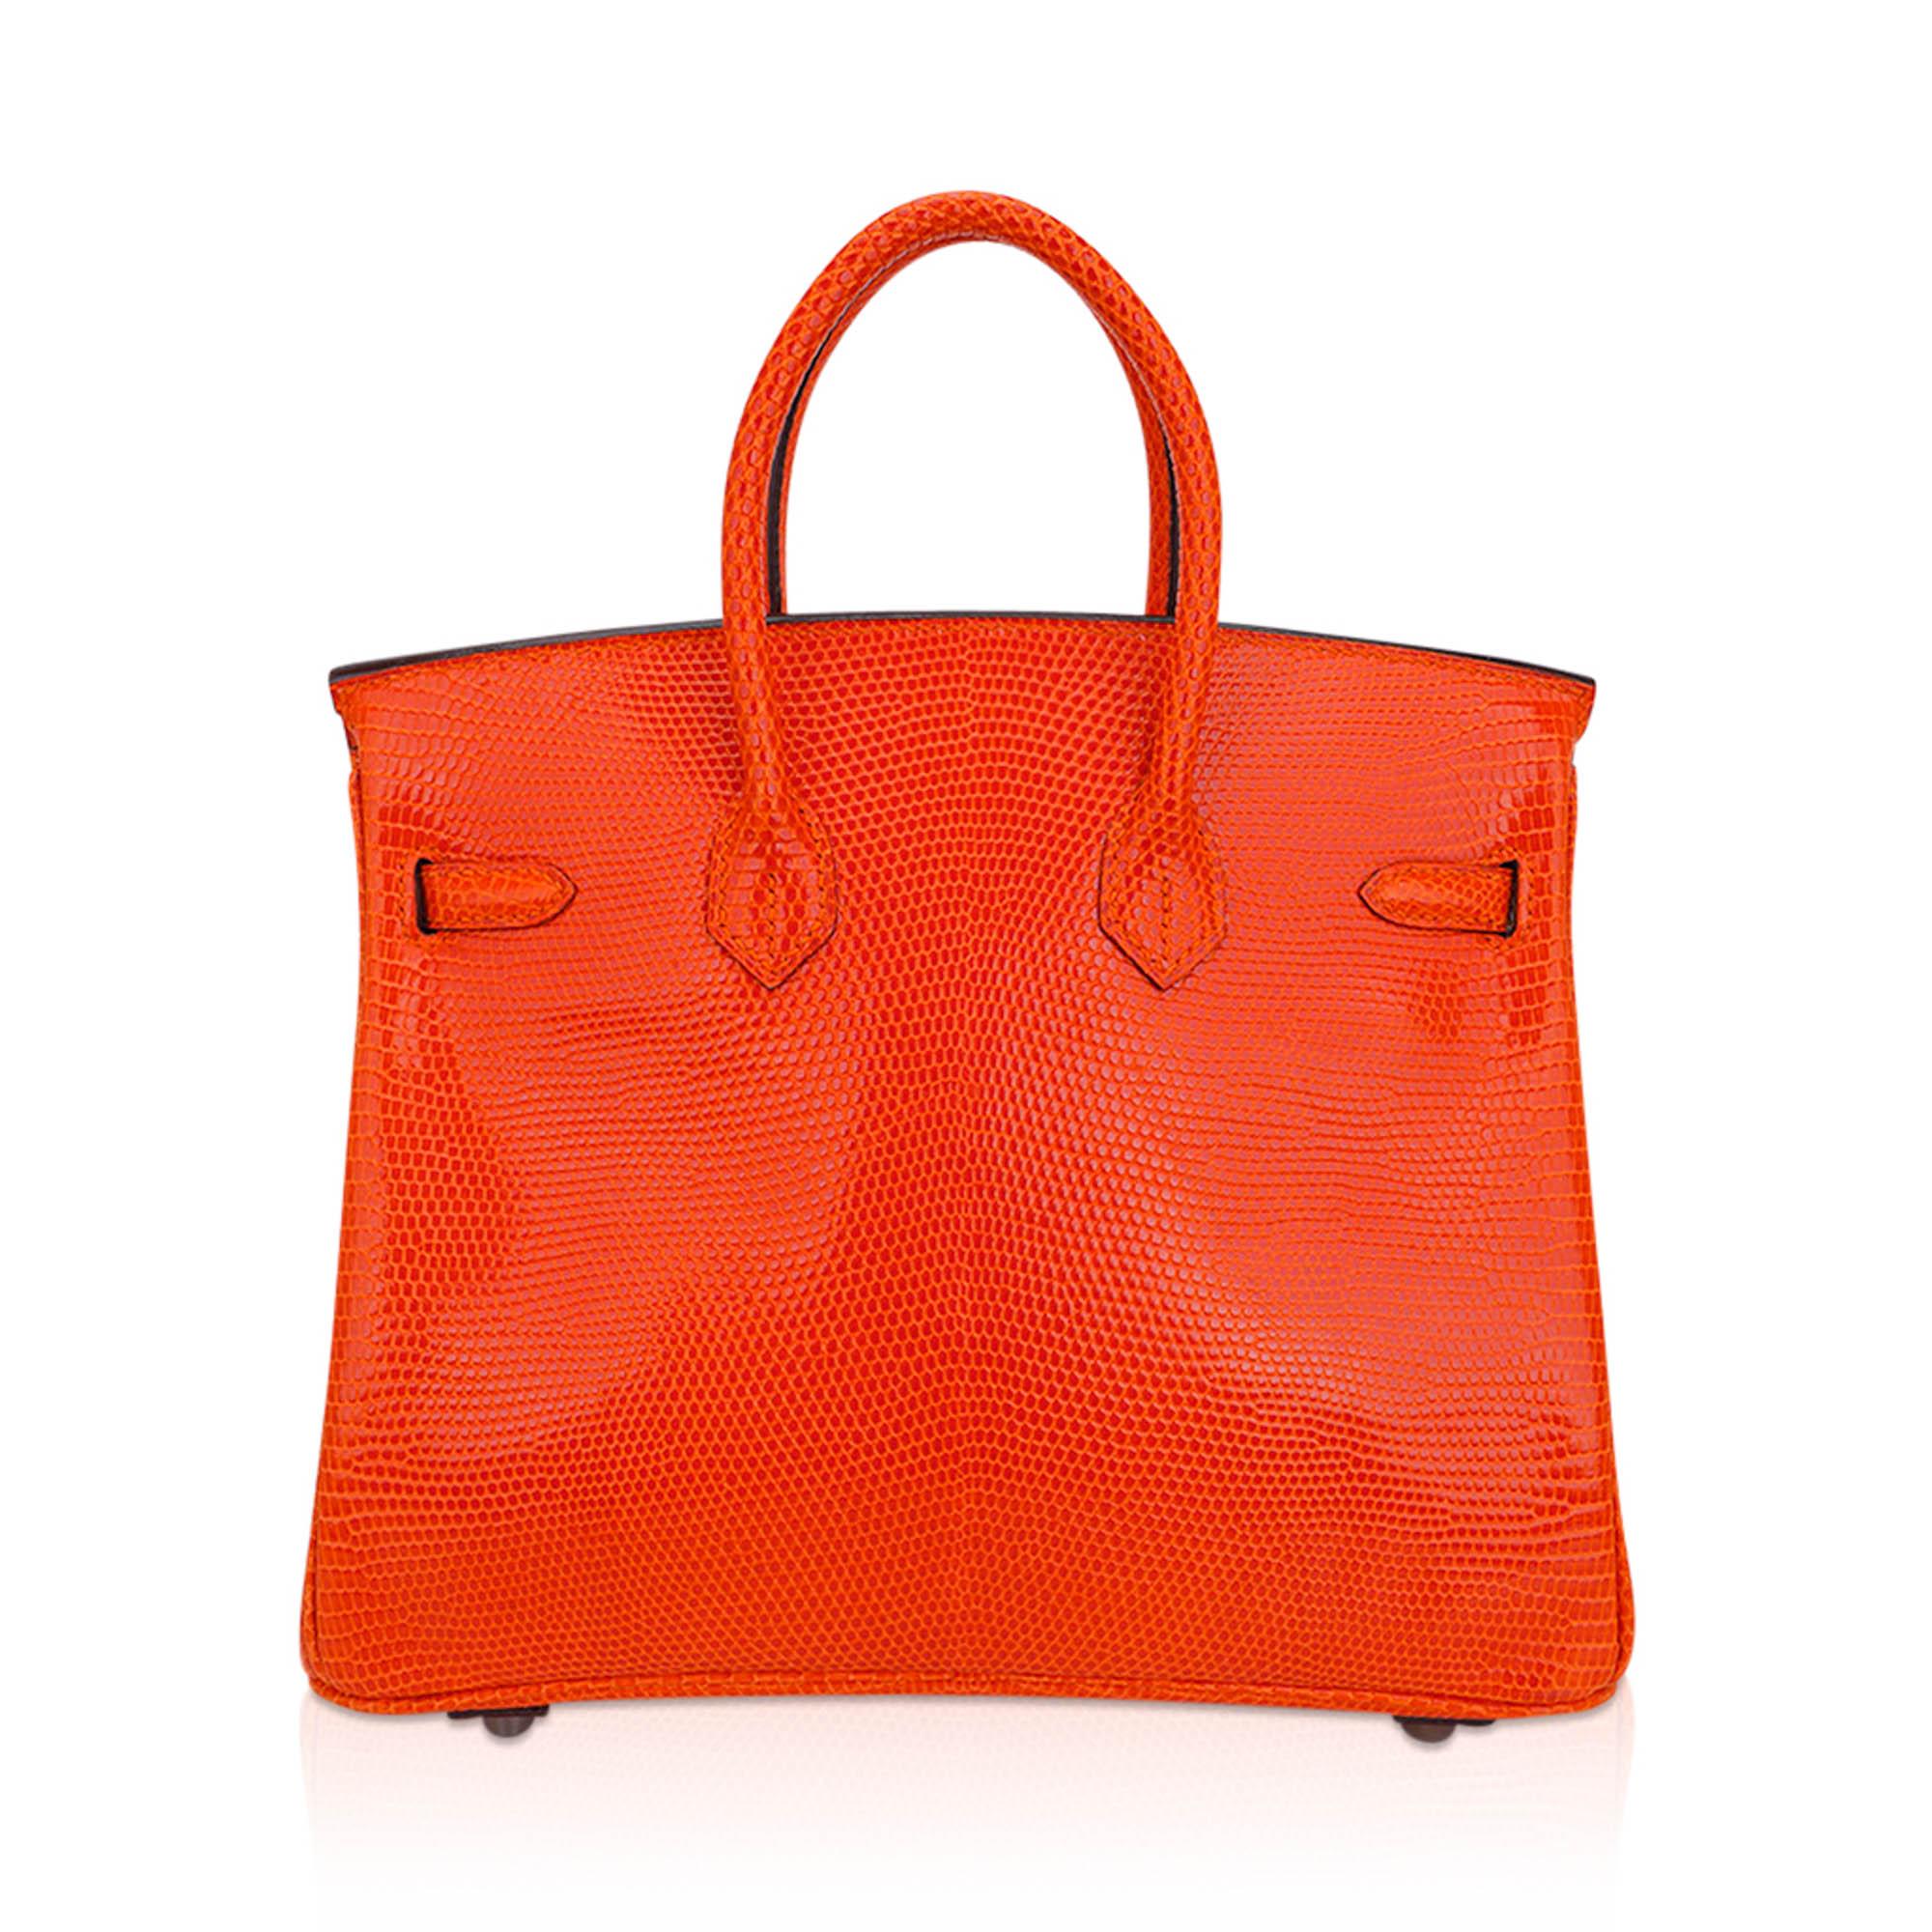 Hermes Birkin 25 Orange Tangerine Lizard Limited Edition Bag Ruthenium Hardware For Sale 2